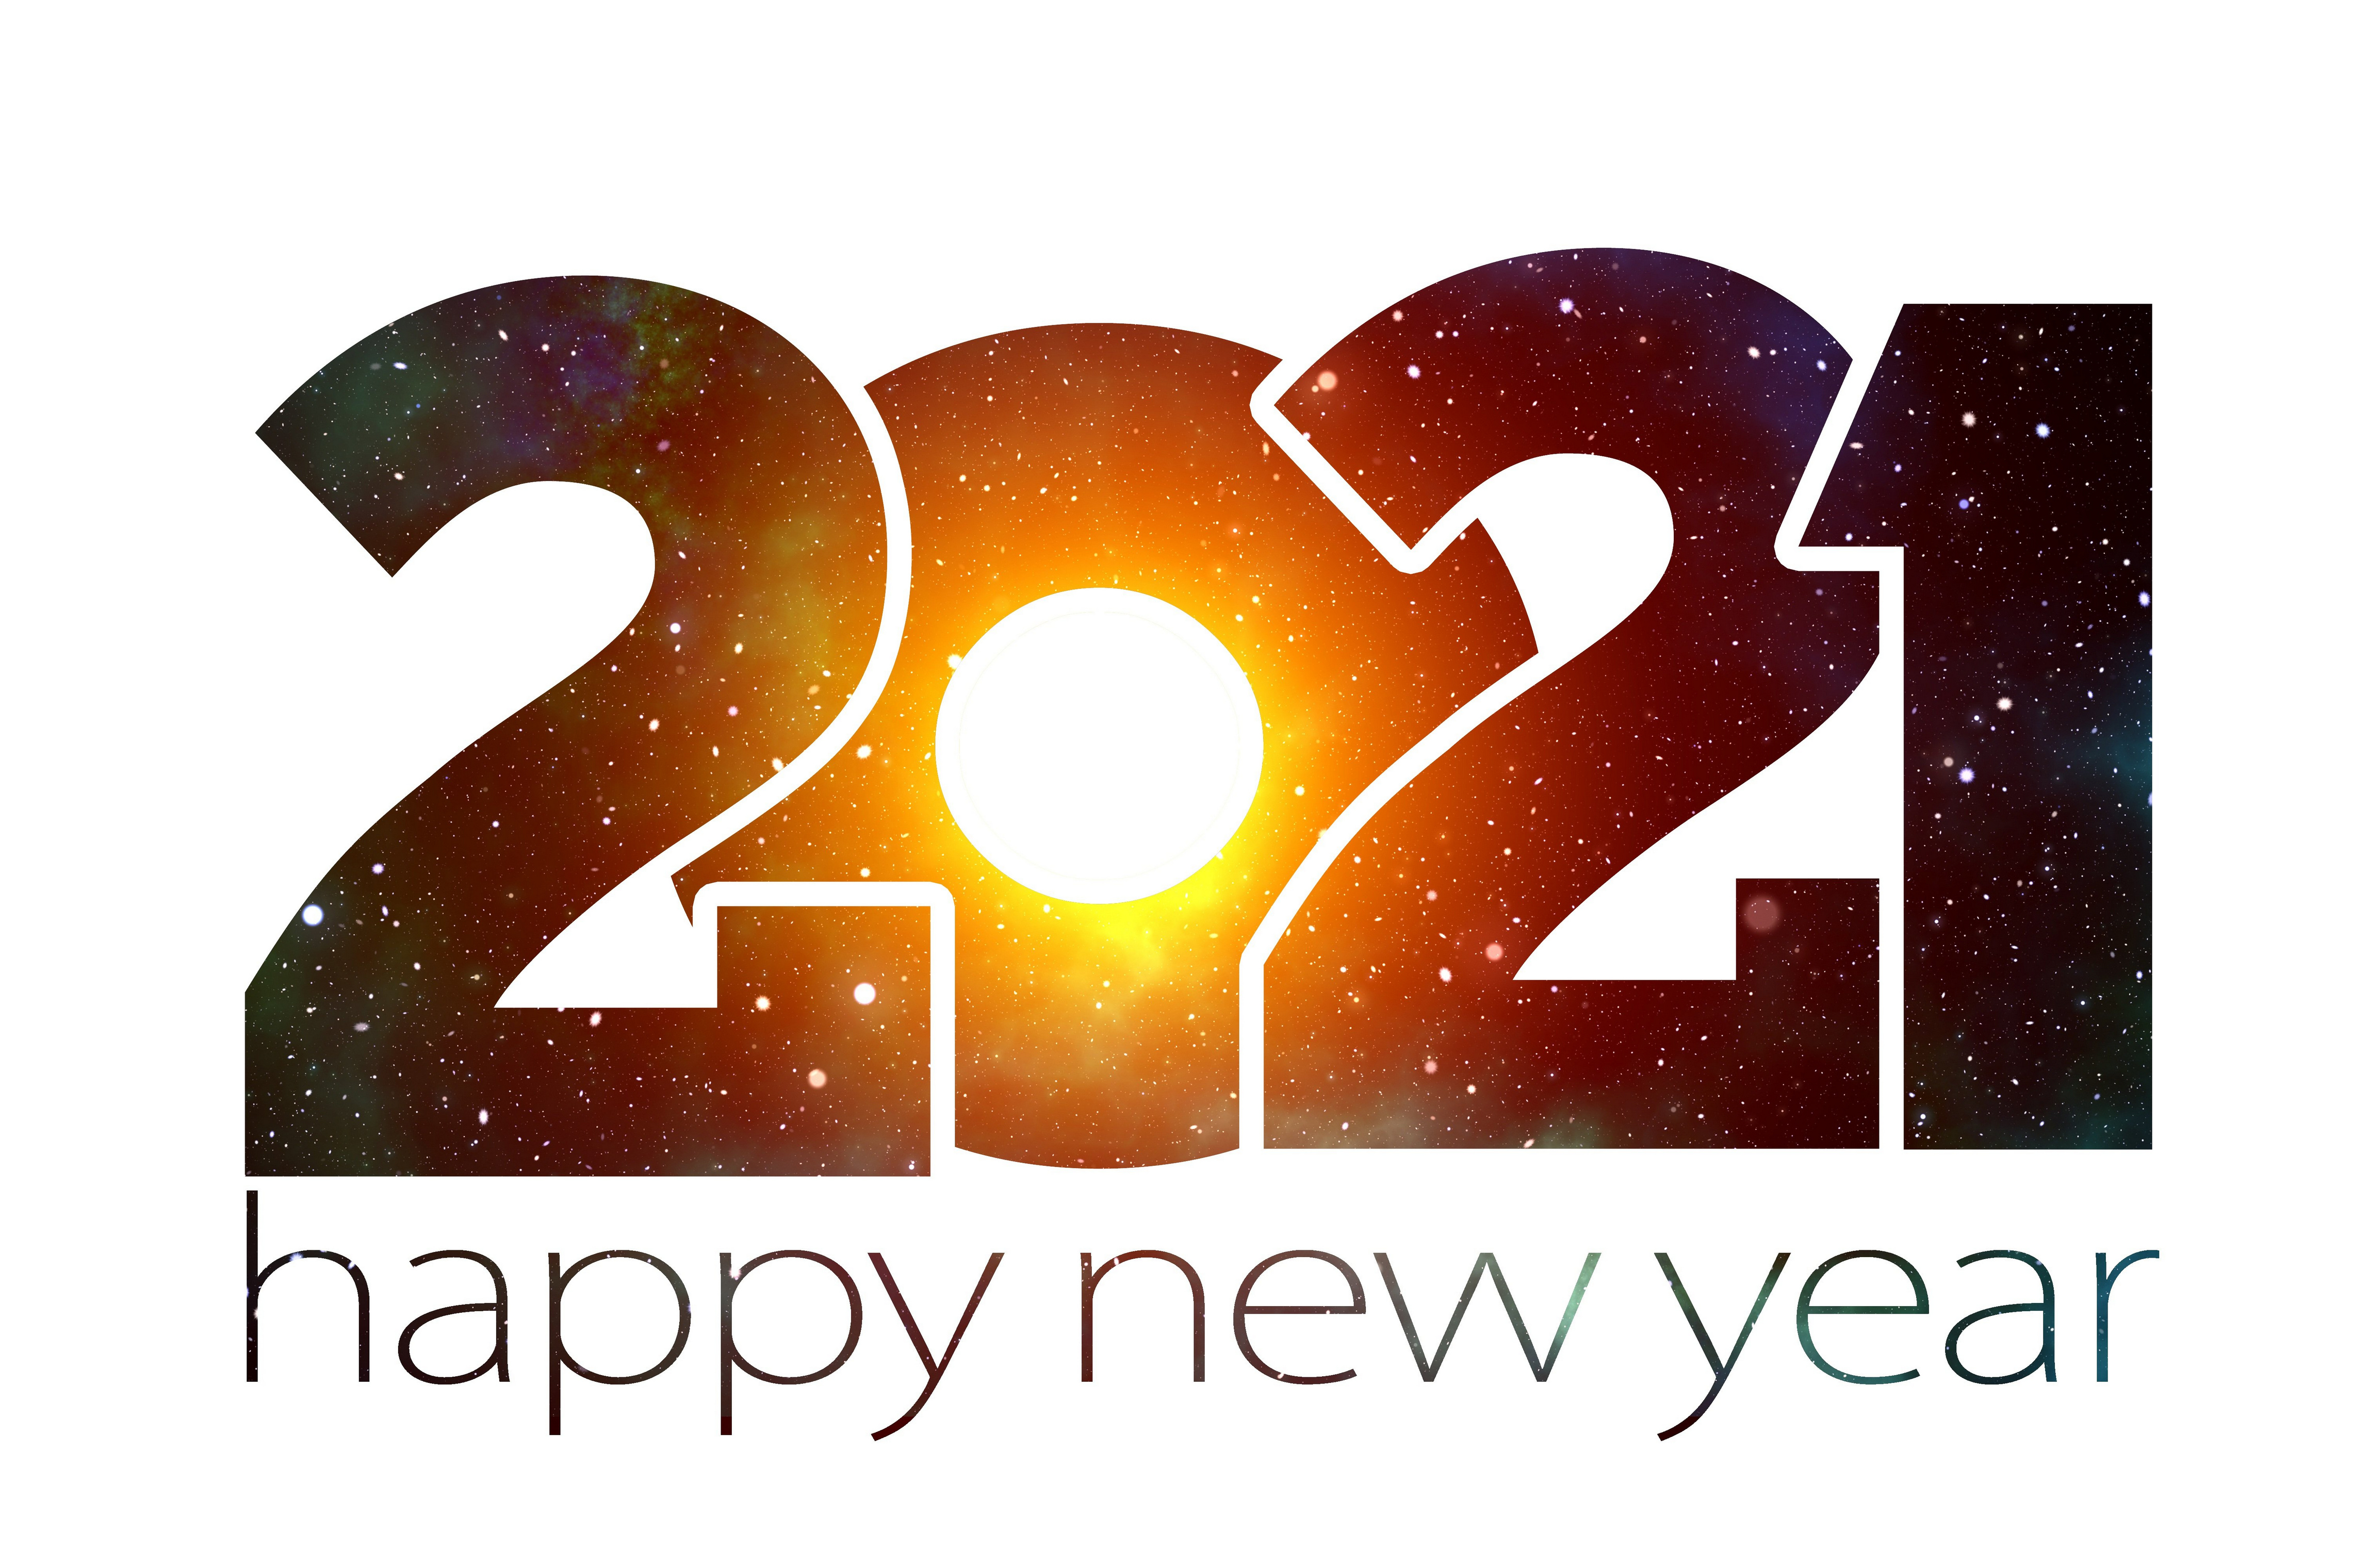 Happy New Year New Year 2021 4562x3041